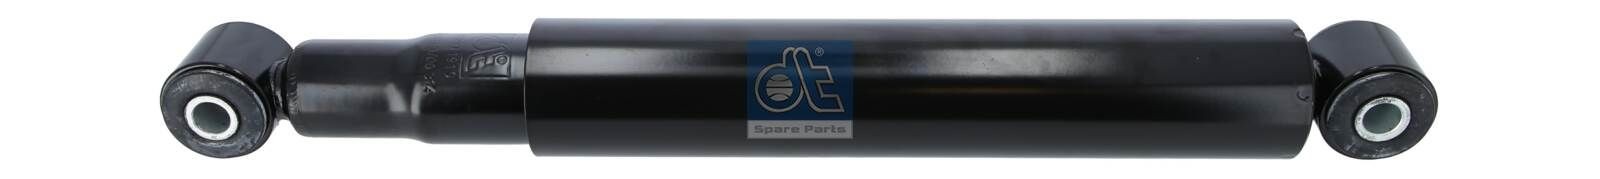 106 608 DT Spare Parts Front Axle, Oil Pressure, Telescopic Shock Absorber, Top eye, Bottom eye Shocks 4.61314 buy